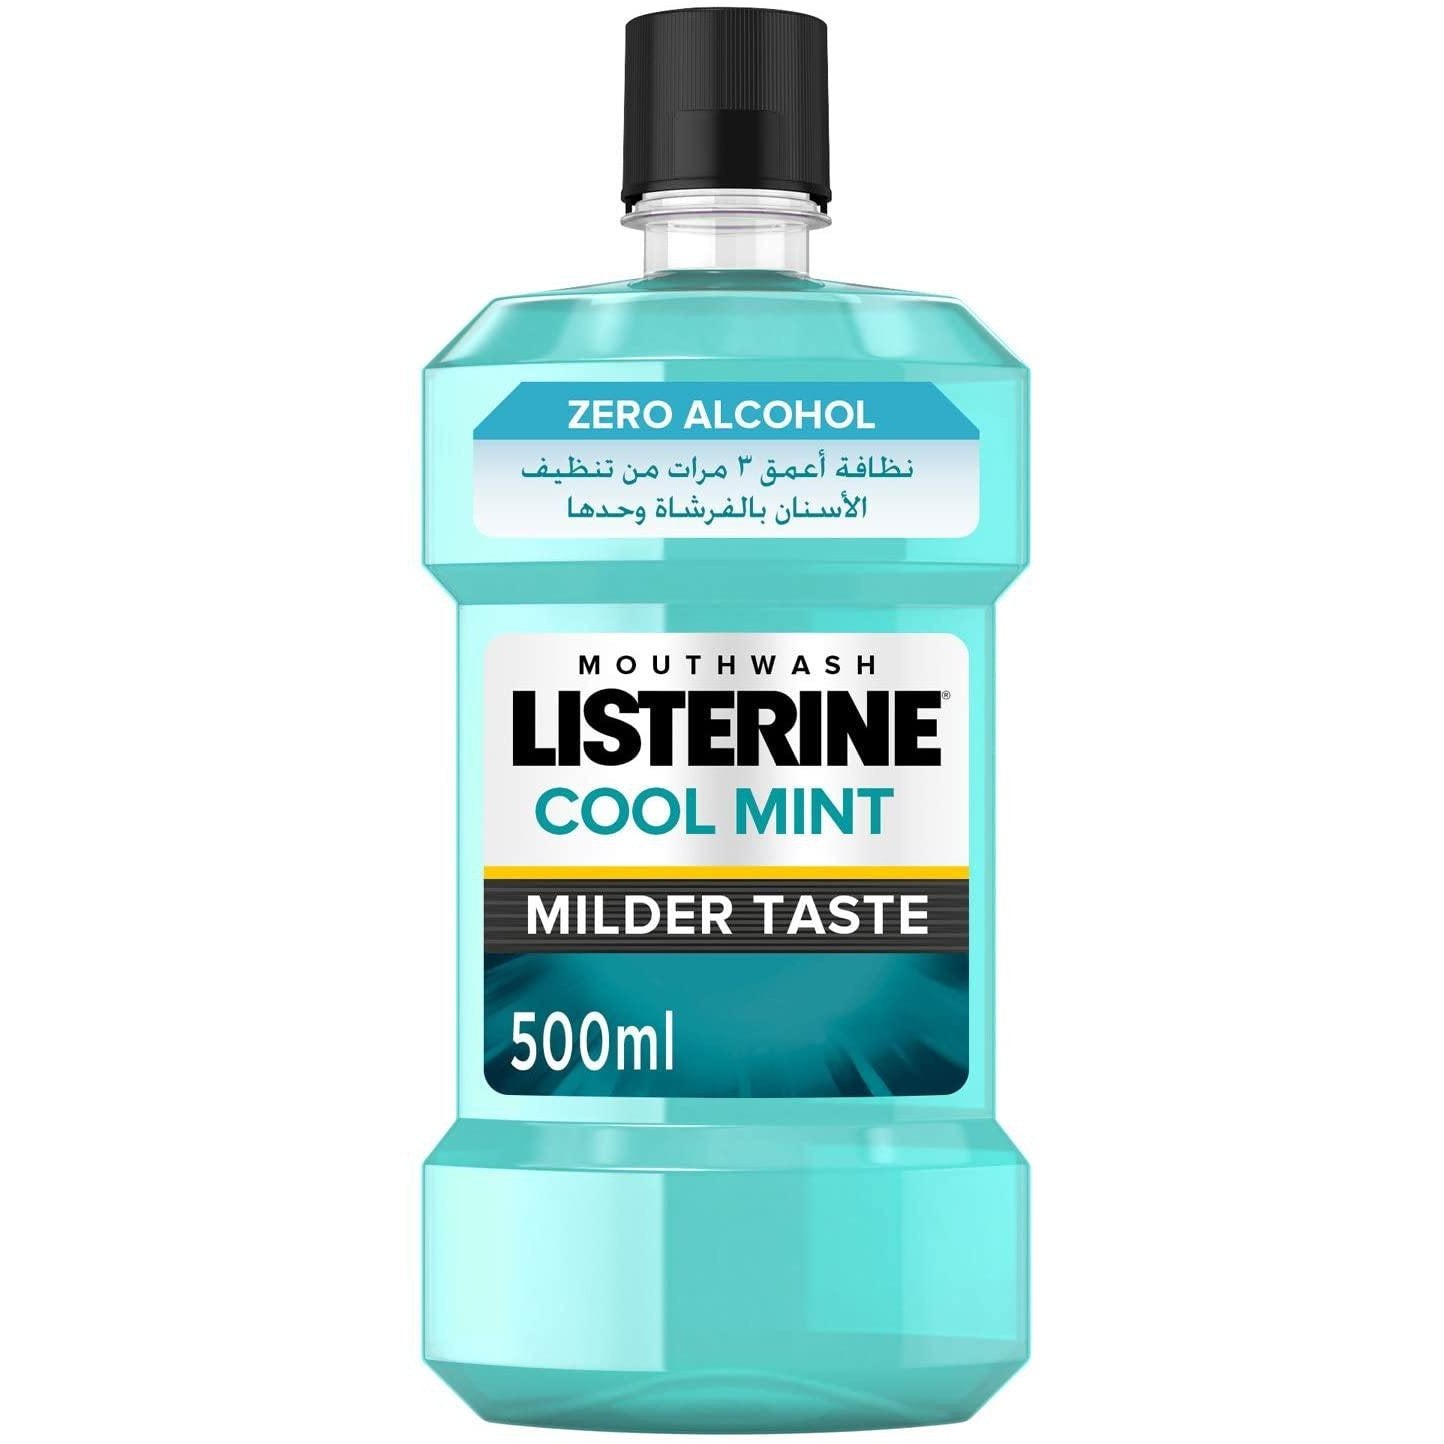 Listerine Breath Freshening Mouthwash, Cool Mint, Milder Taste, 500ml - Med7 Online